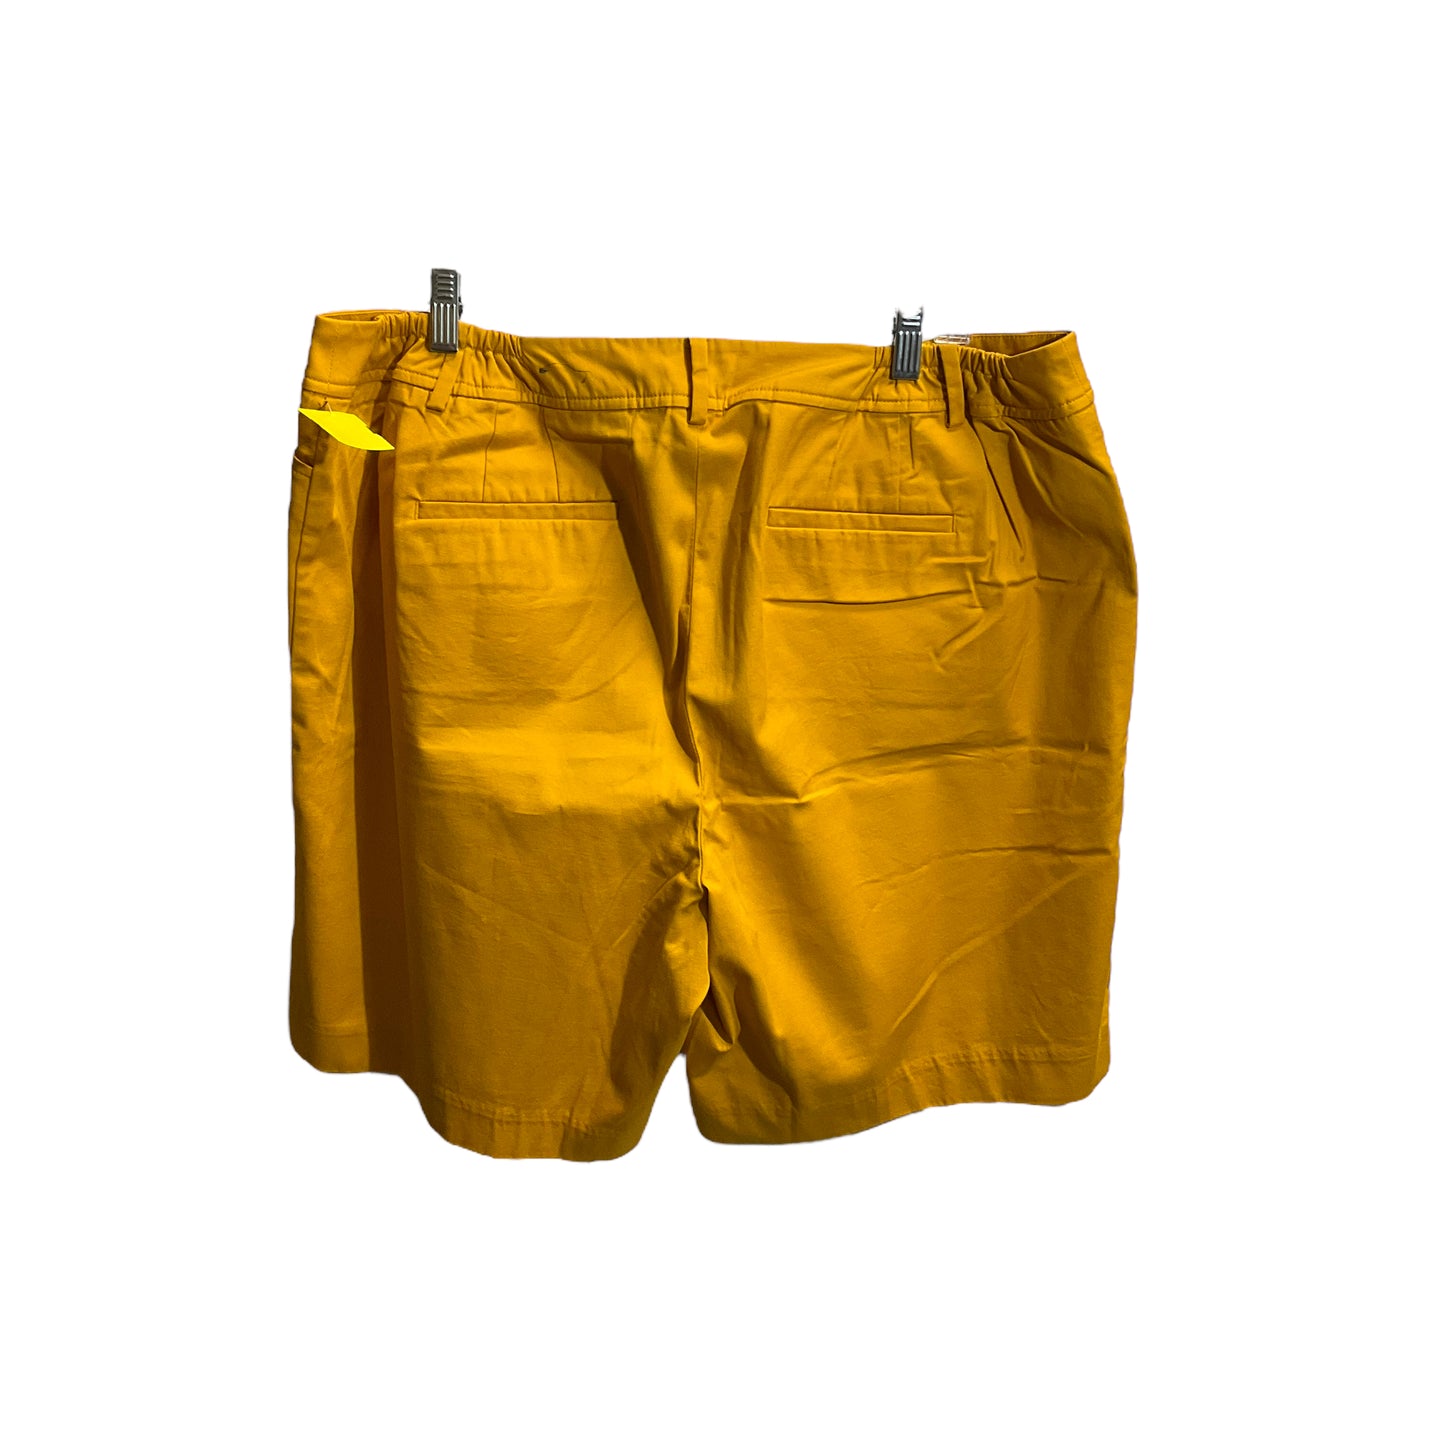 Shorts By Talbots  Size: 18